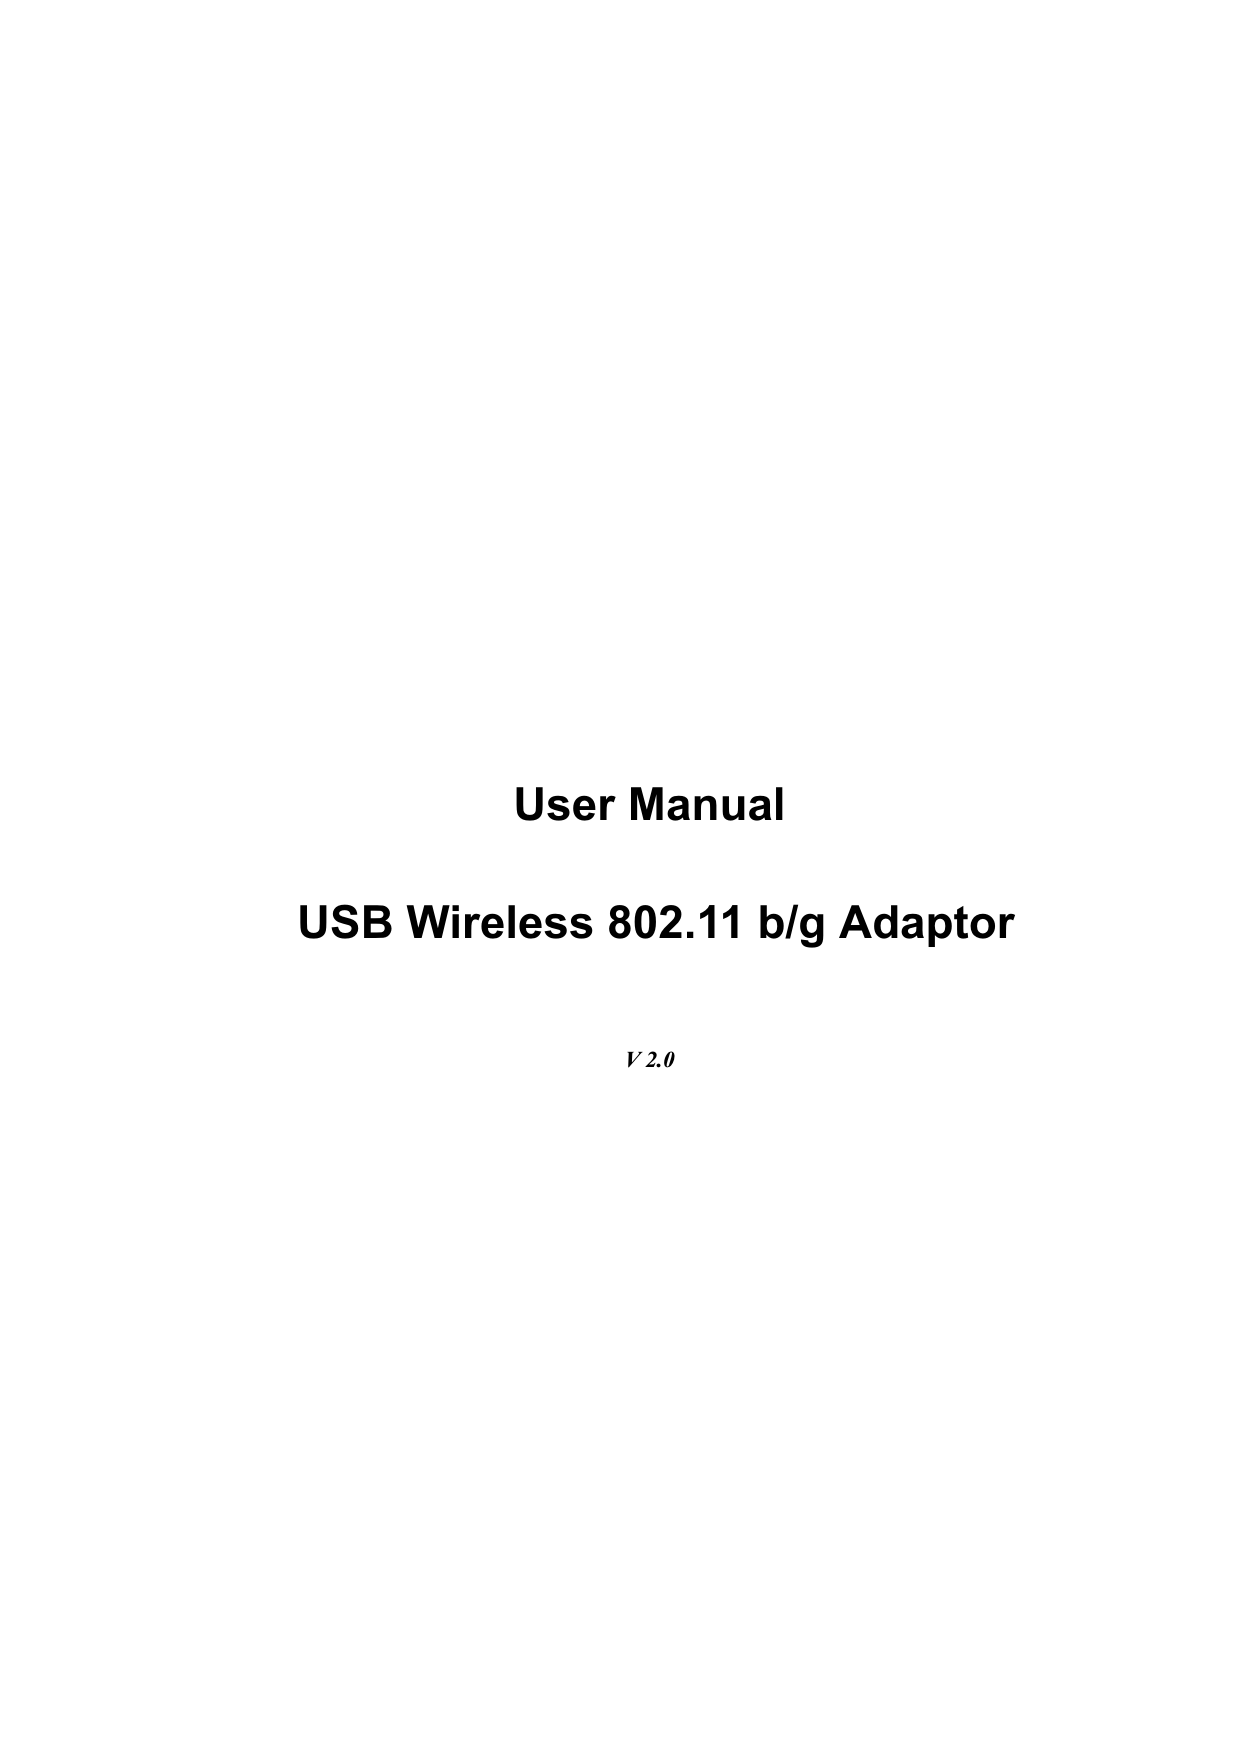 User Manual USB Wireless 802.11 b/g AdaptorV 2.0